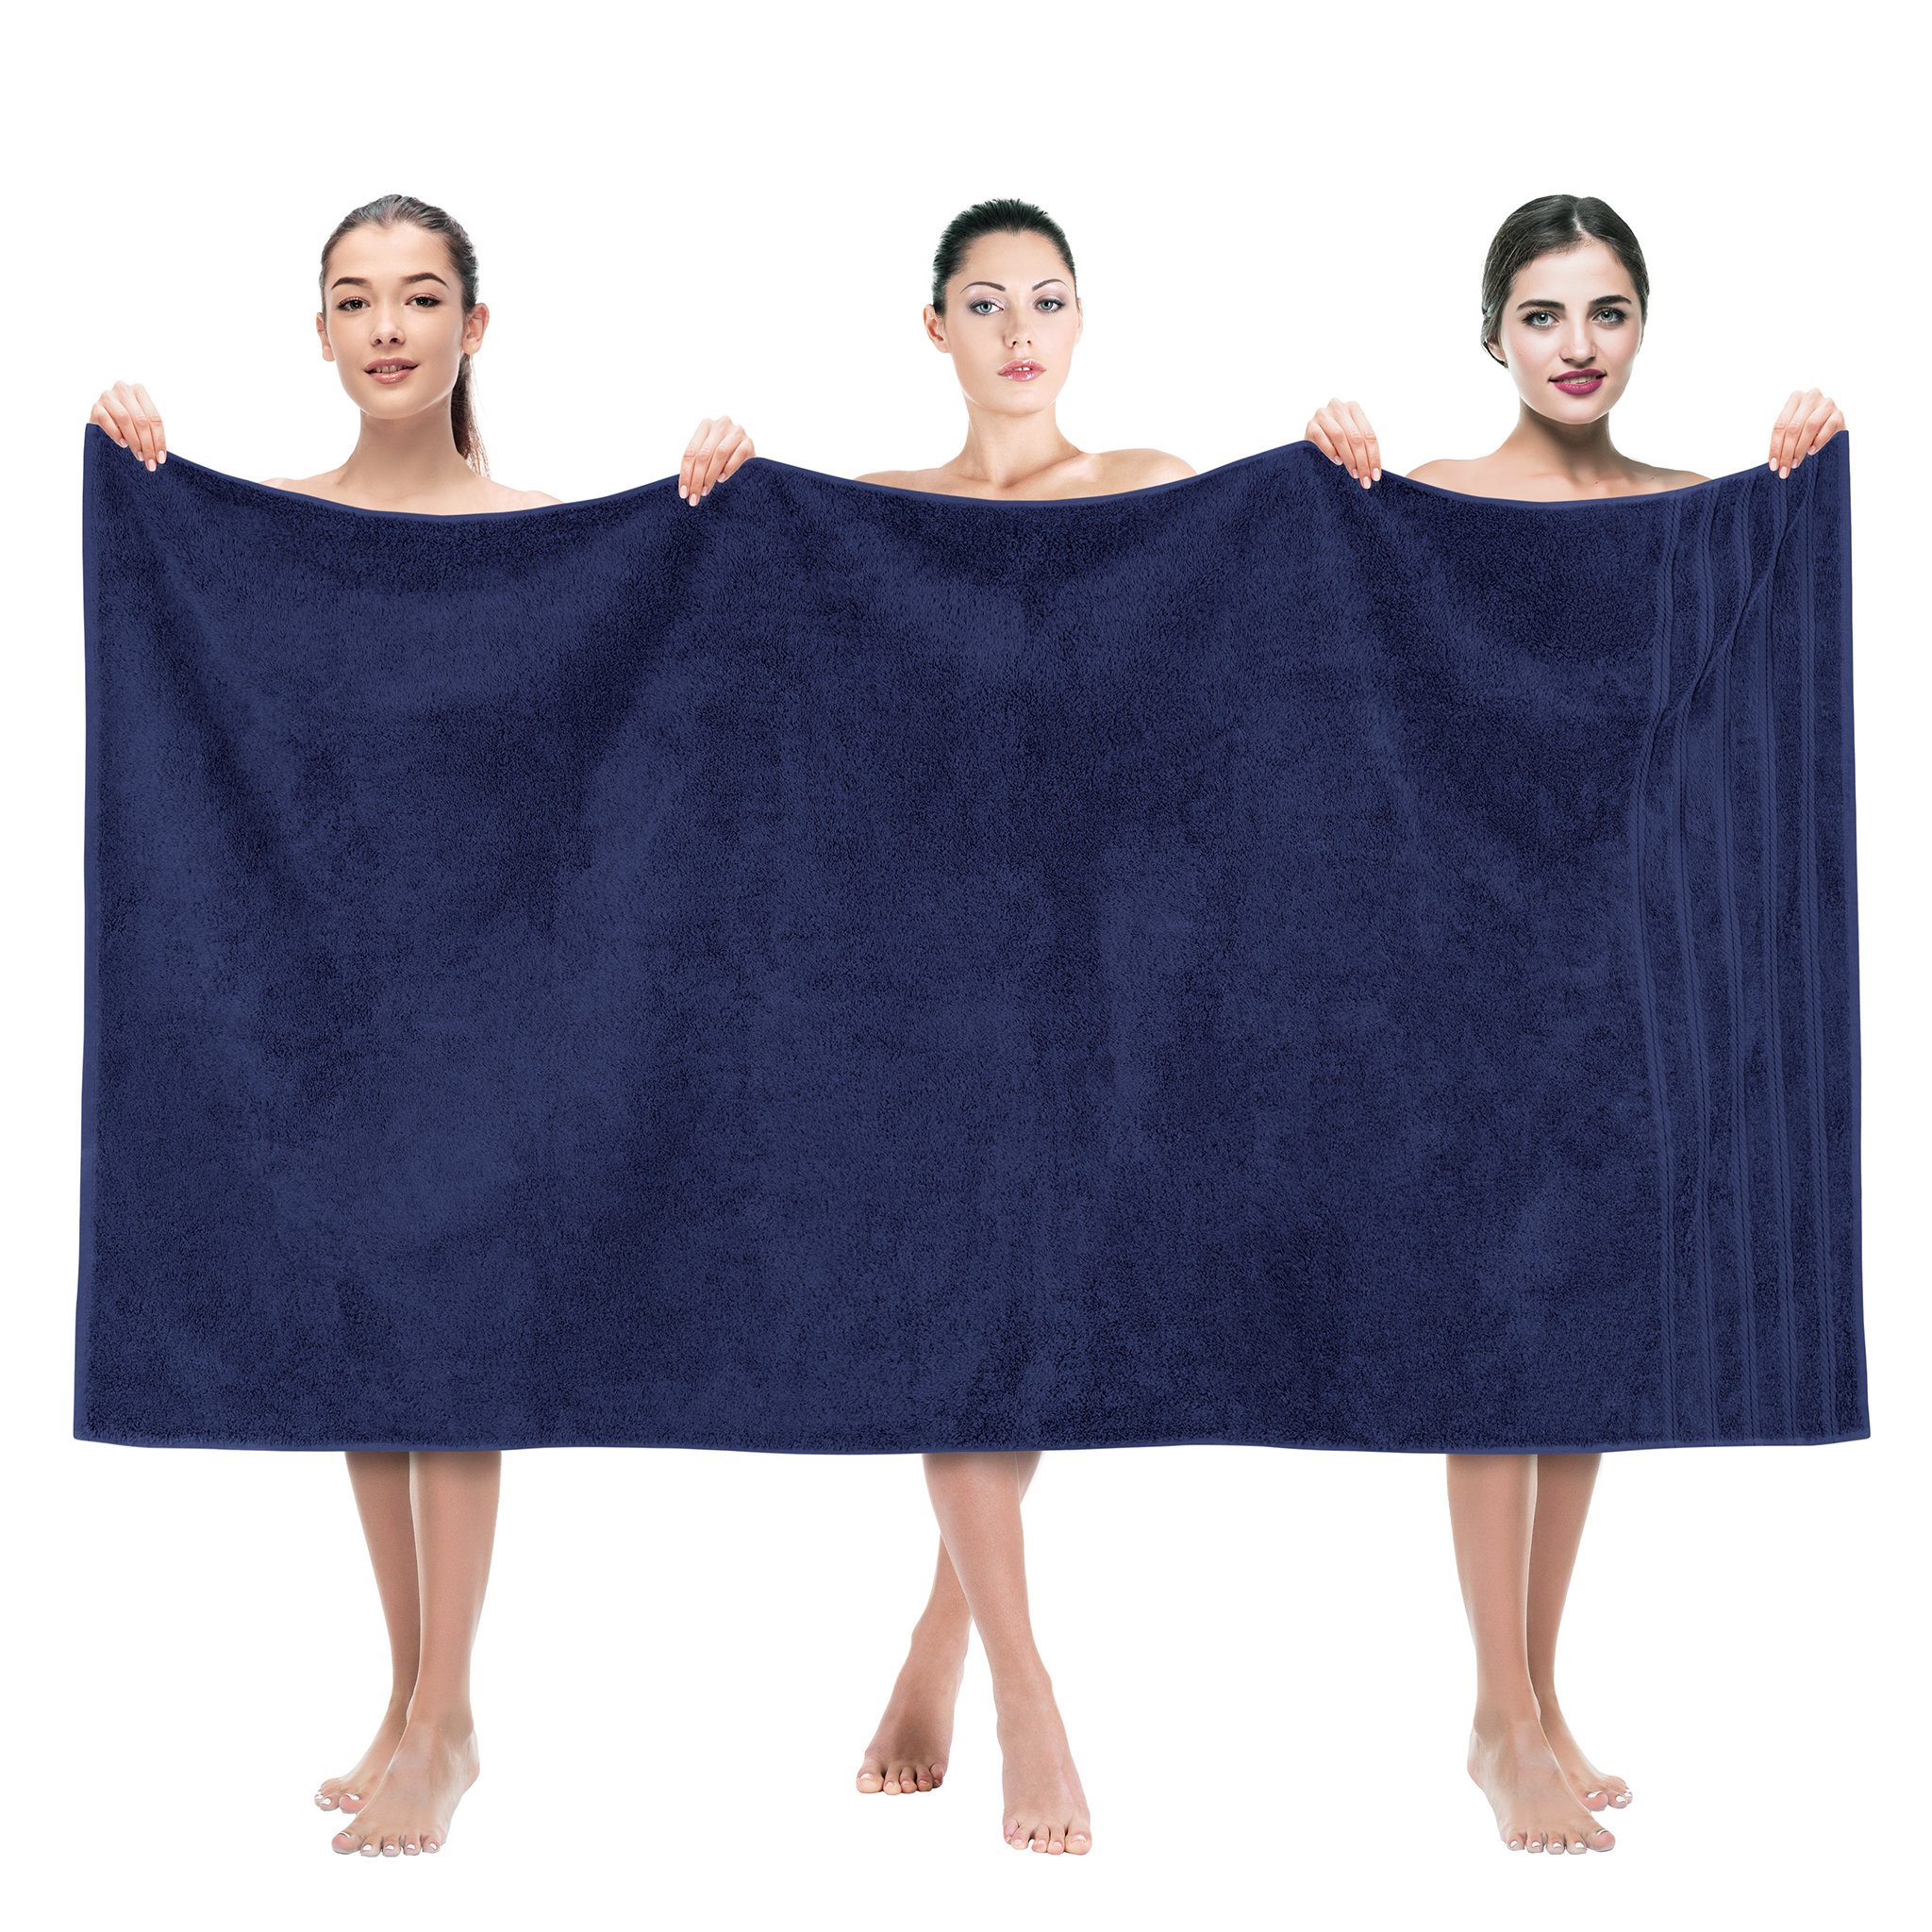 American Soft Linen - 35x70 Jumbo Bath Sheet Turkish Bath Towel - 16 Piece Case Pack - Navy-Blue - 1